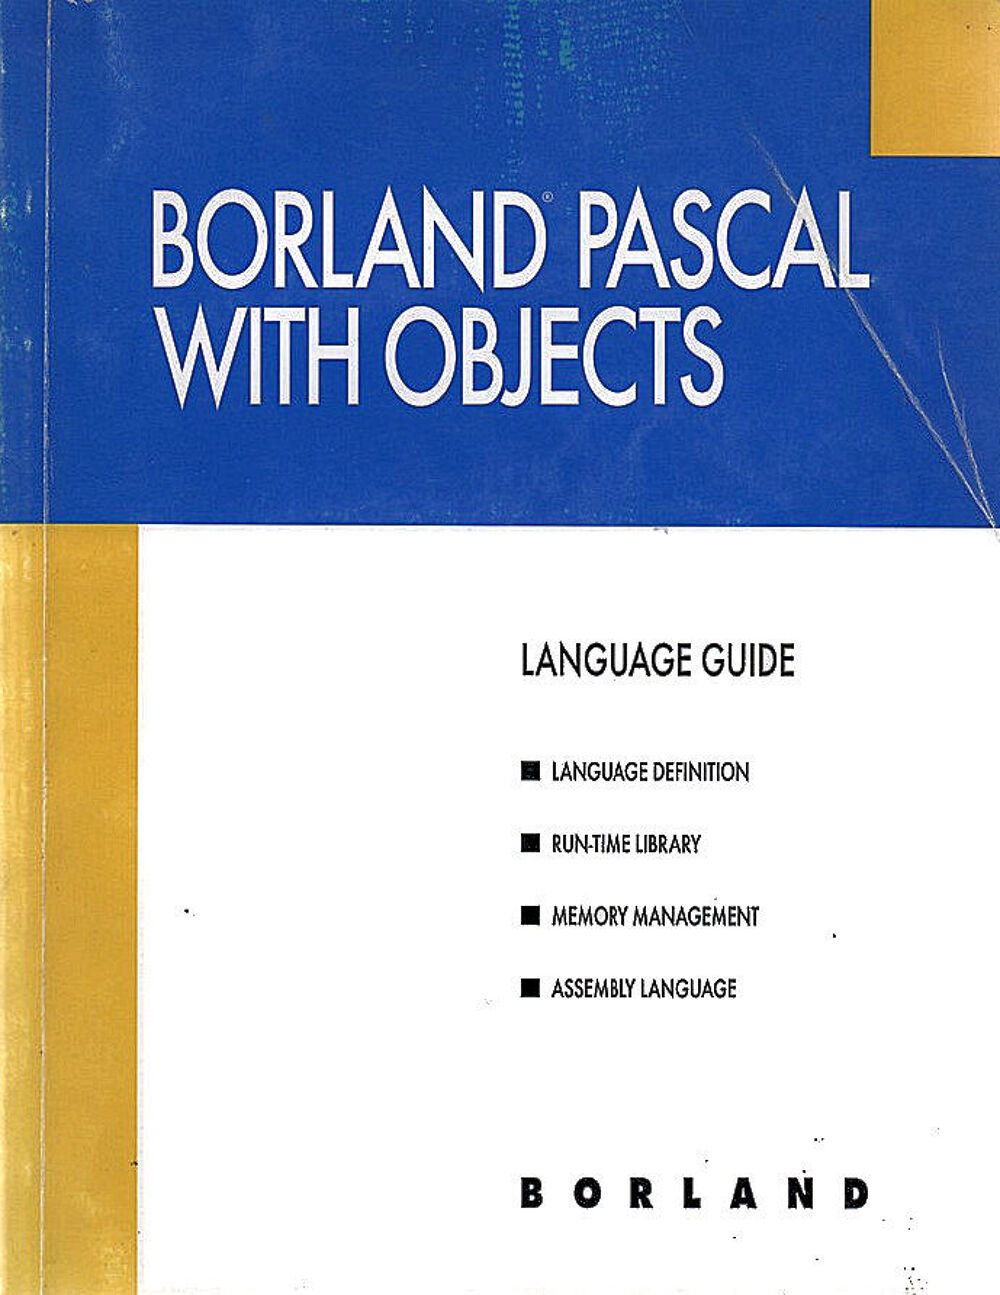 Borland Pascal With Objects - Borland Matriel informatique